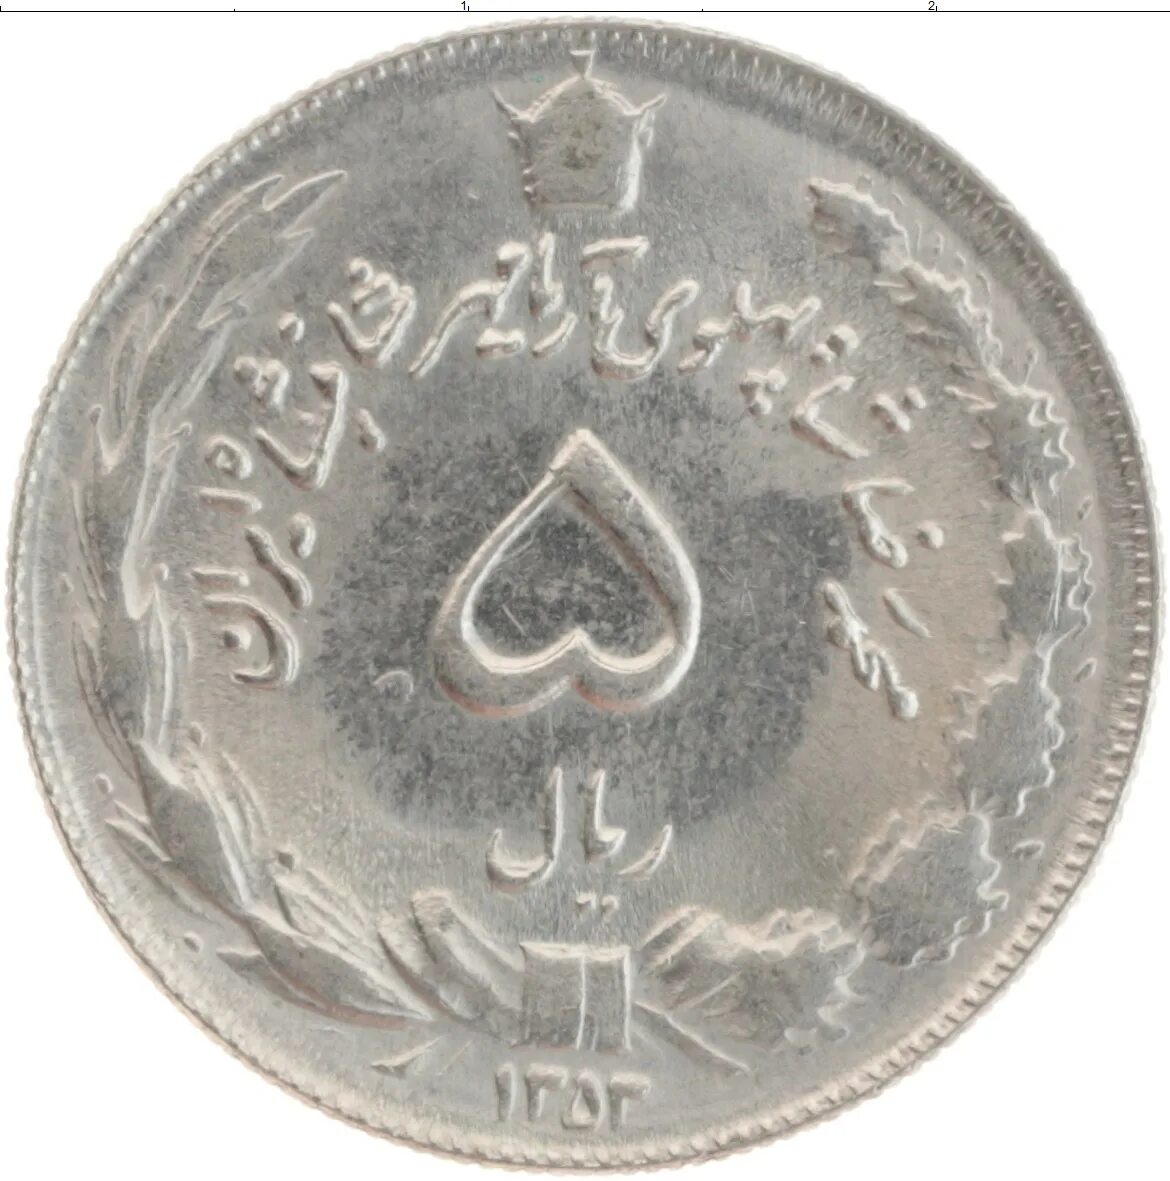 Иранская монета 5 букв. Иран 1954-1975 50 риалов. Иранская монета 1950. Иран 1975 правление. Монеты Ирана фото.